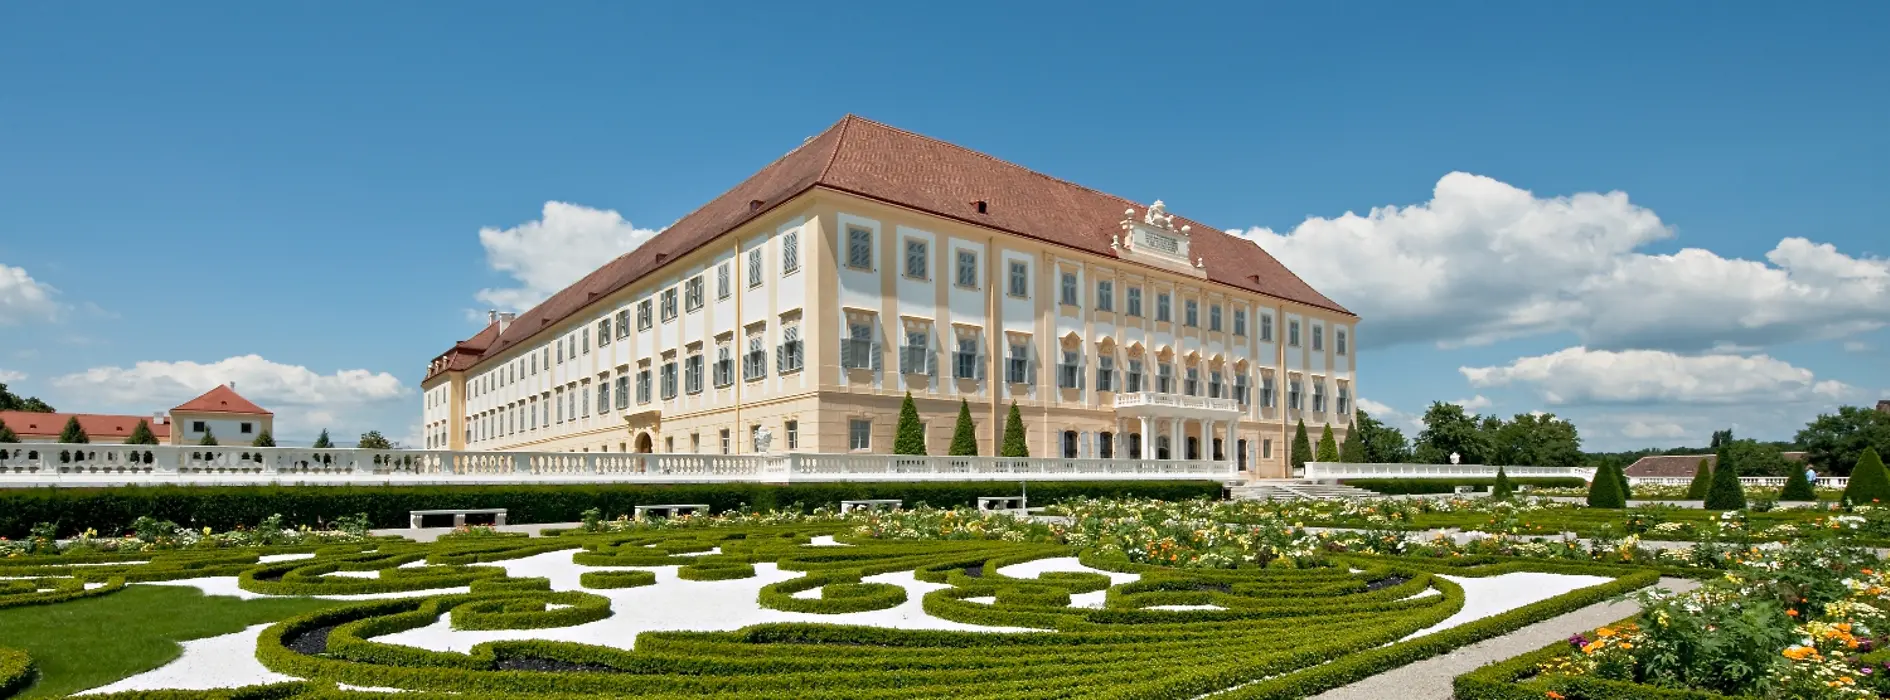 Side view of Schloss Hof